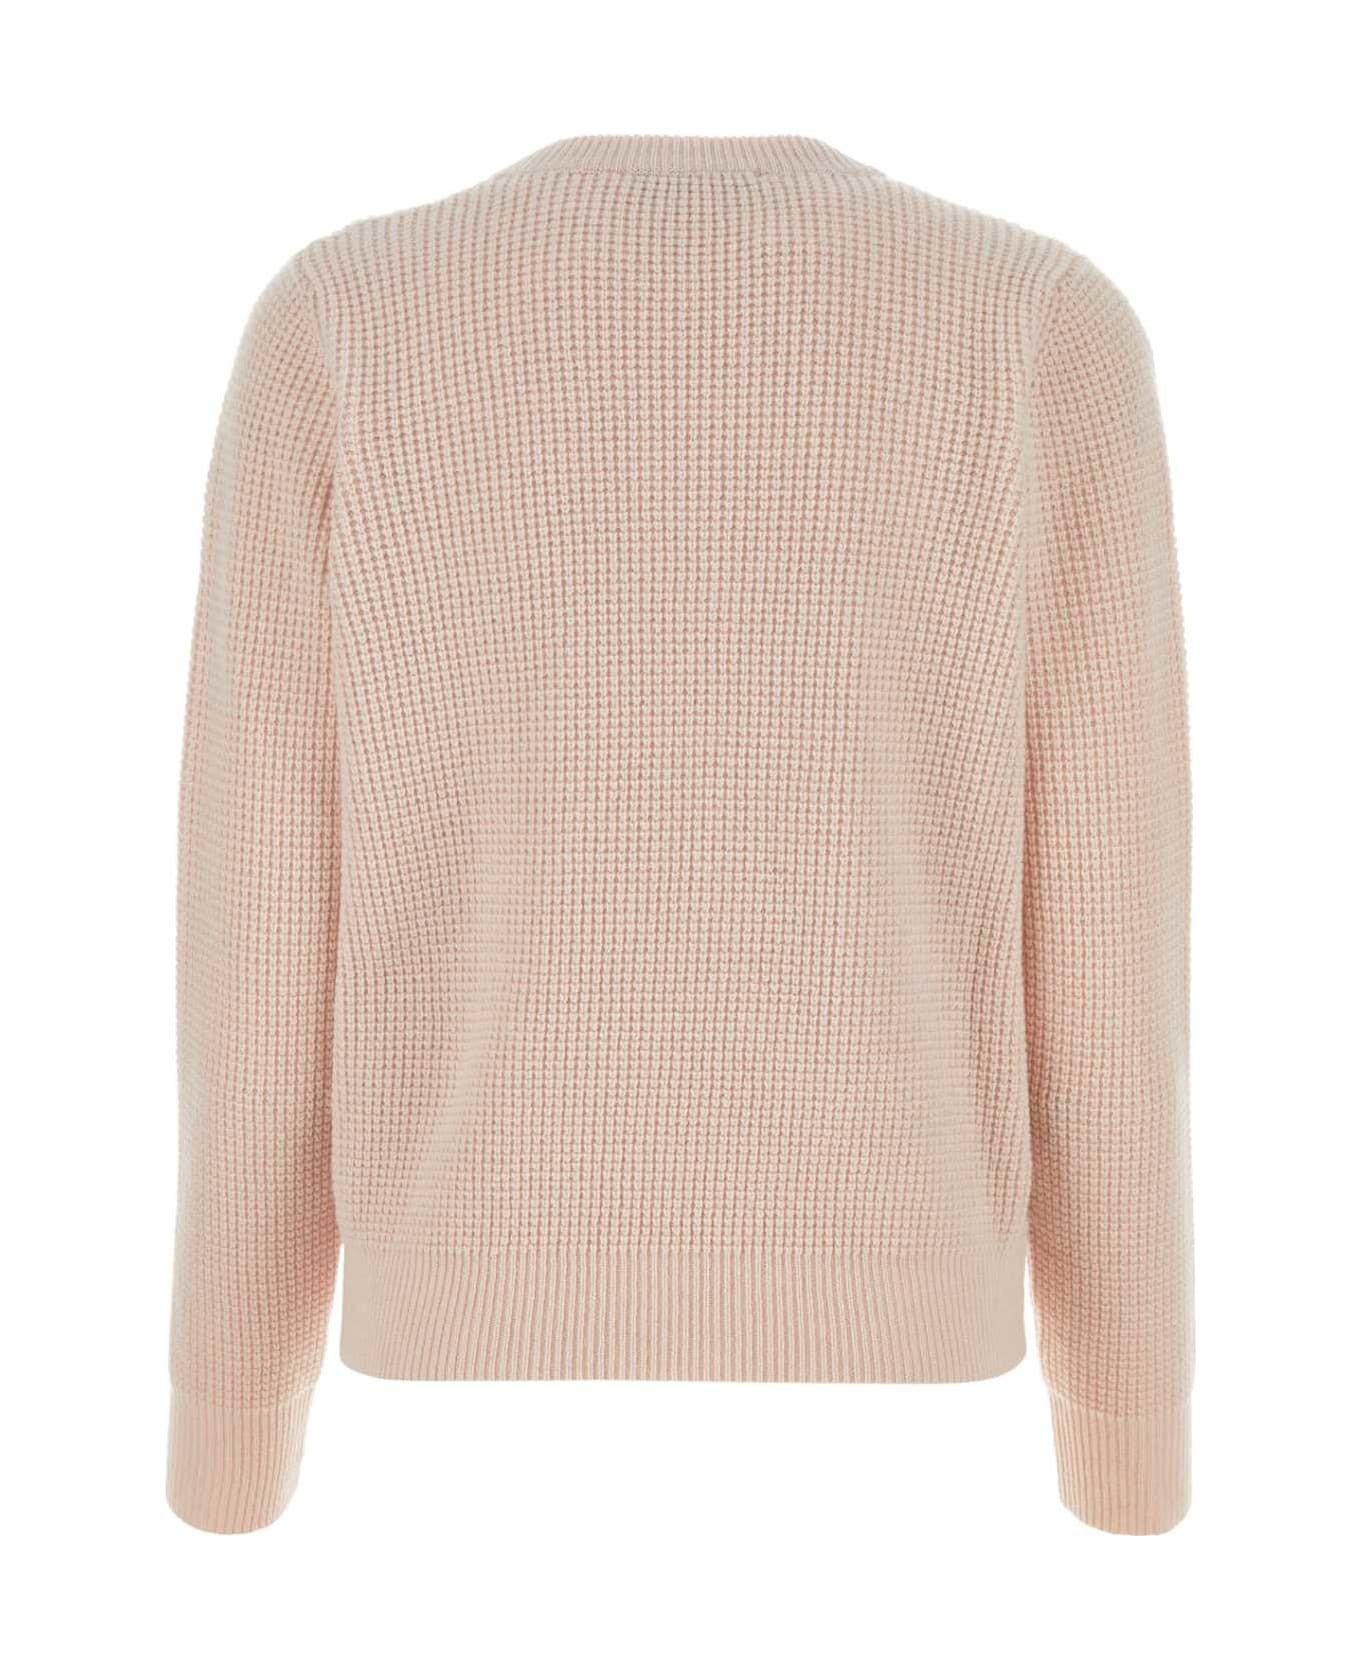 Maison Kitsuné Light Pink Wool Sweater - PALE PINK